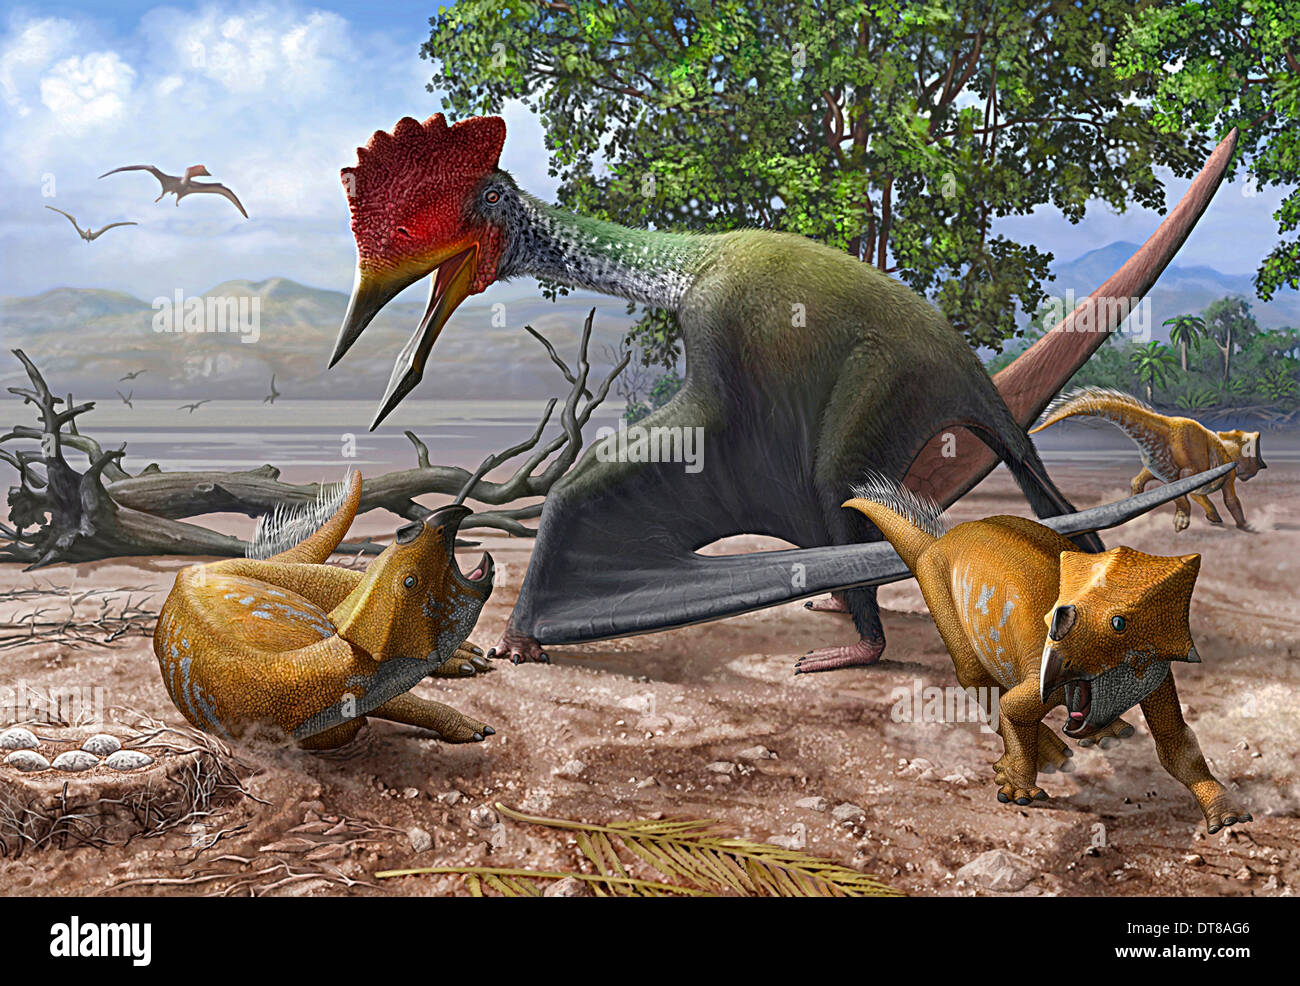 A large Bakonydraco pterosaur attacking a nest of small Ajkaceratops ceratopsian dinosaurs. Stock Photo